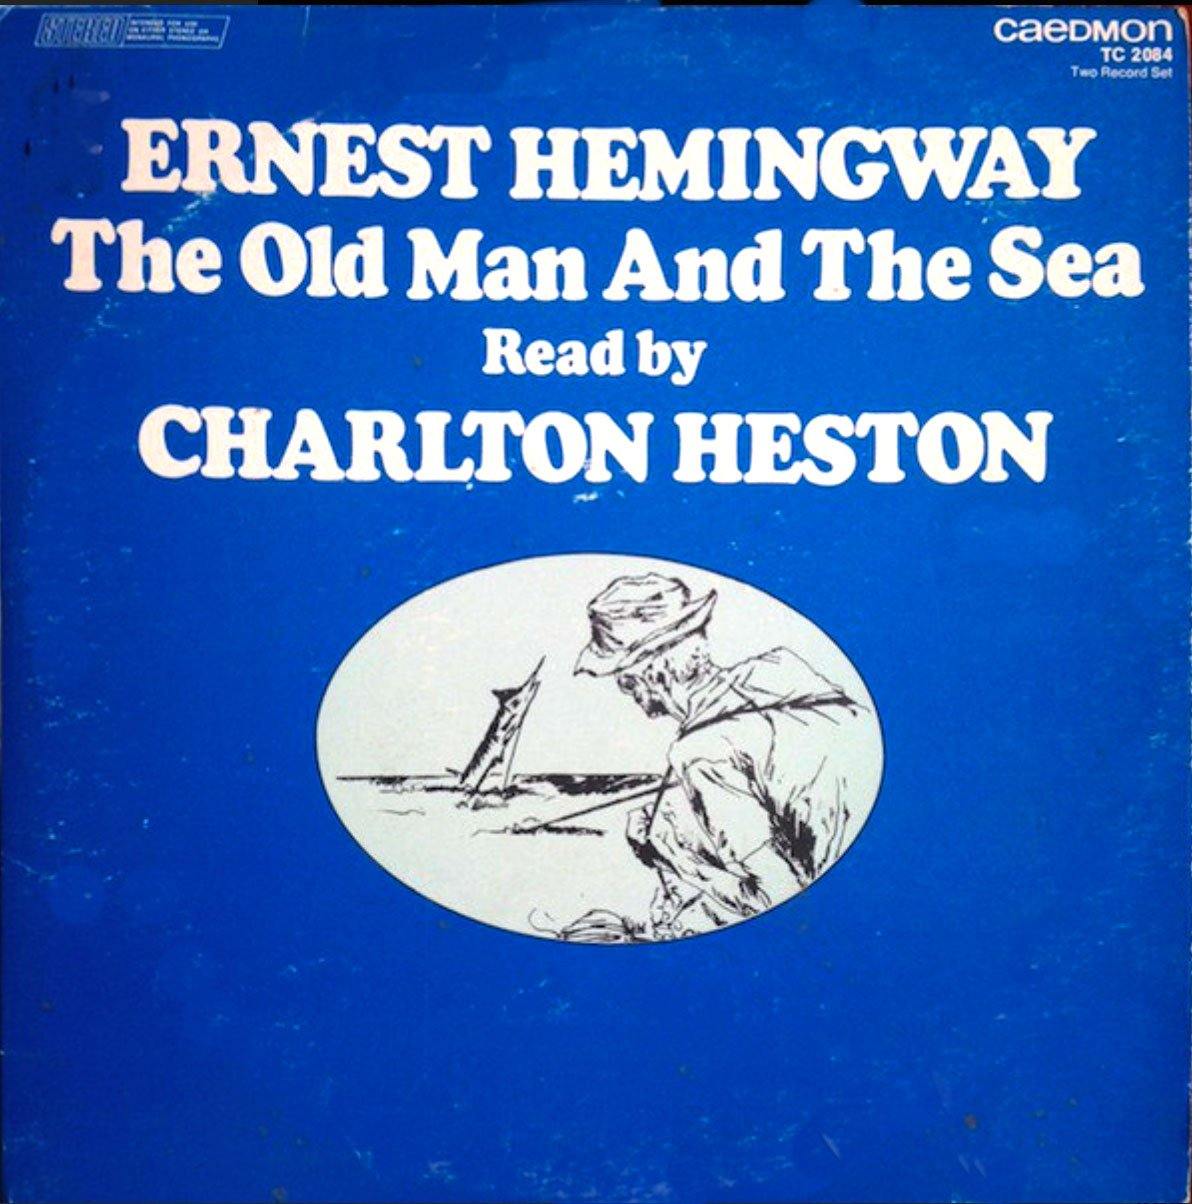 CHARLTON HESTON - Ernest Hemingway ‎– The Old Man And The Sea - VinylPursuit.com